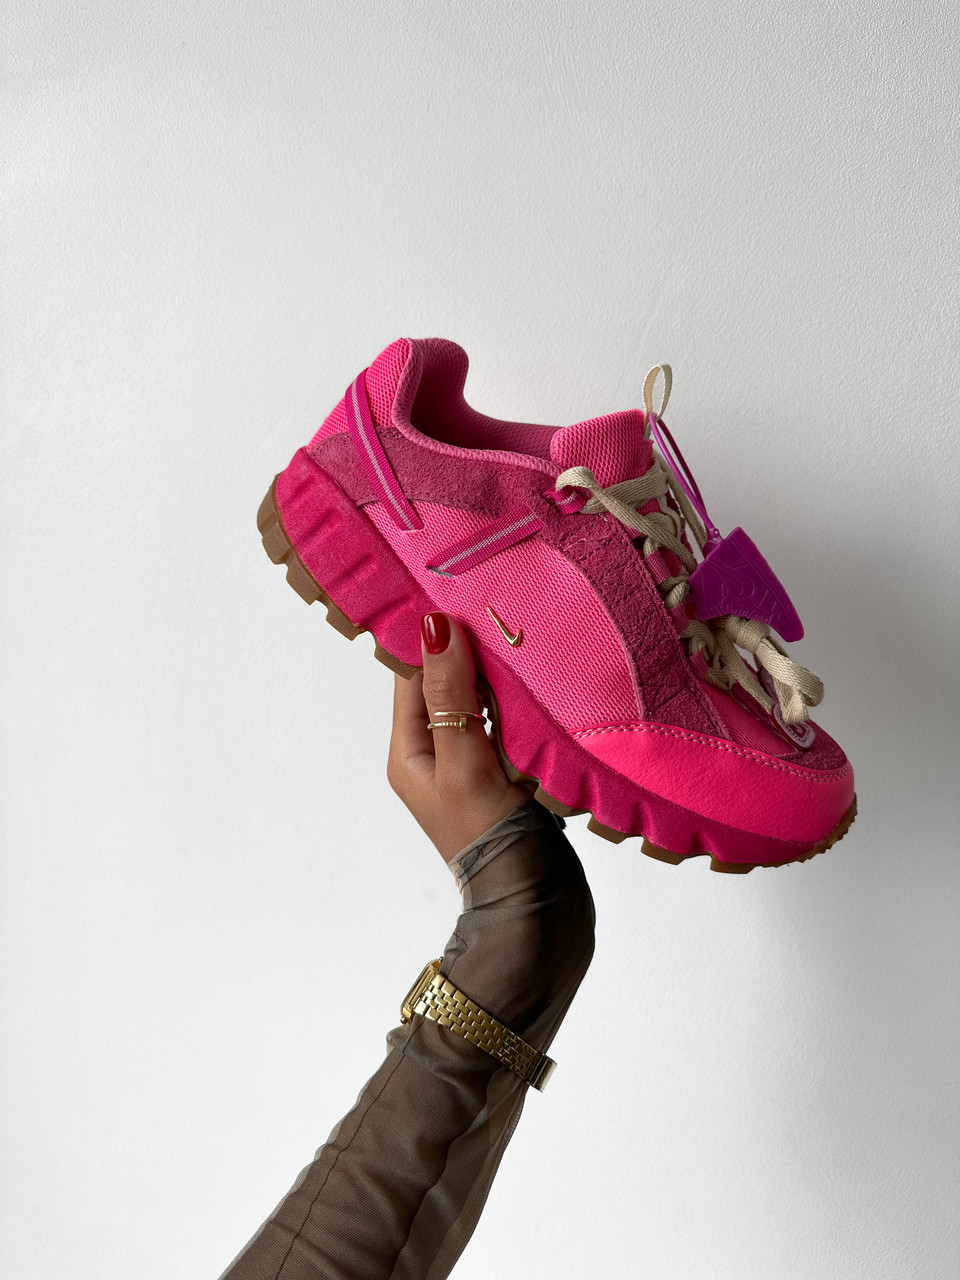 Jaquemus x Nike Humara Pink